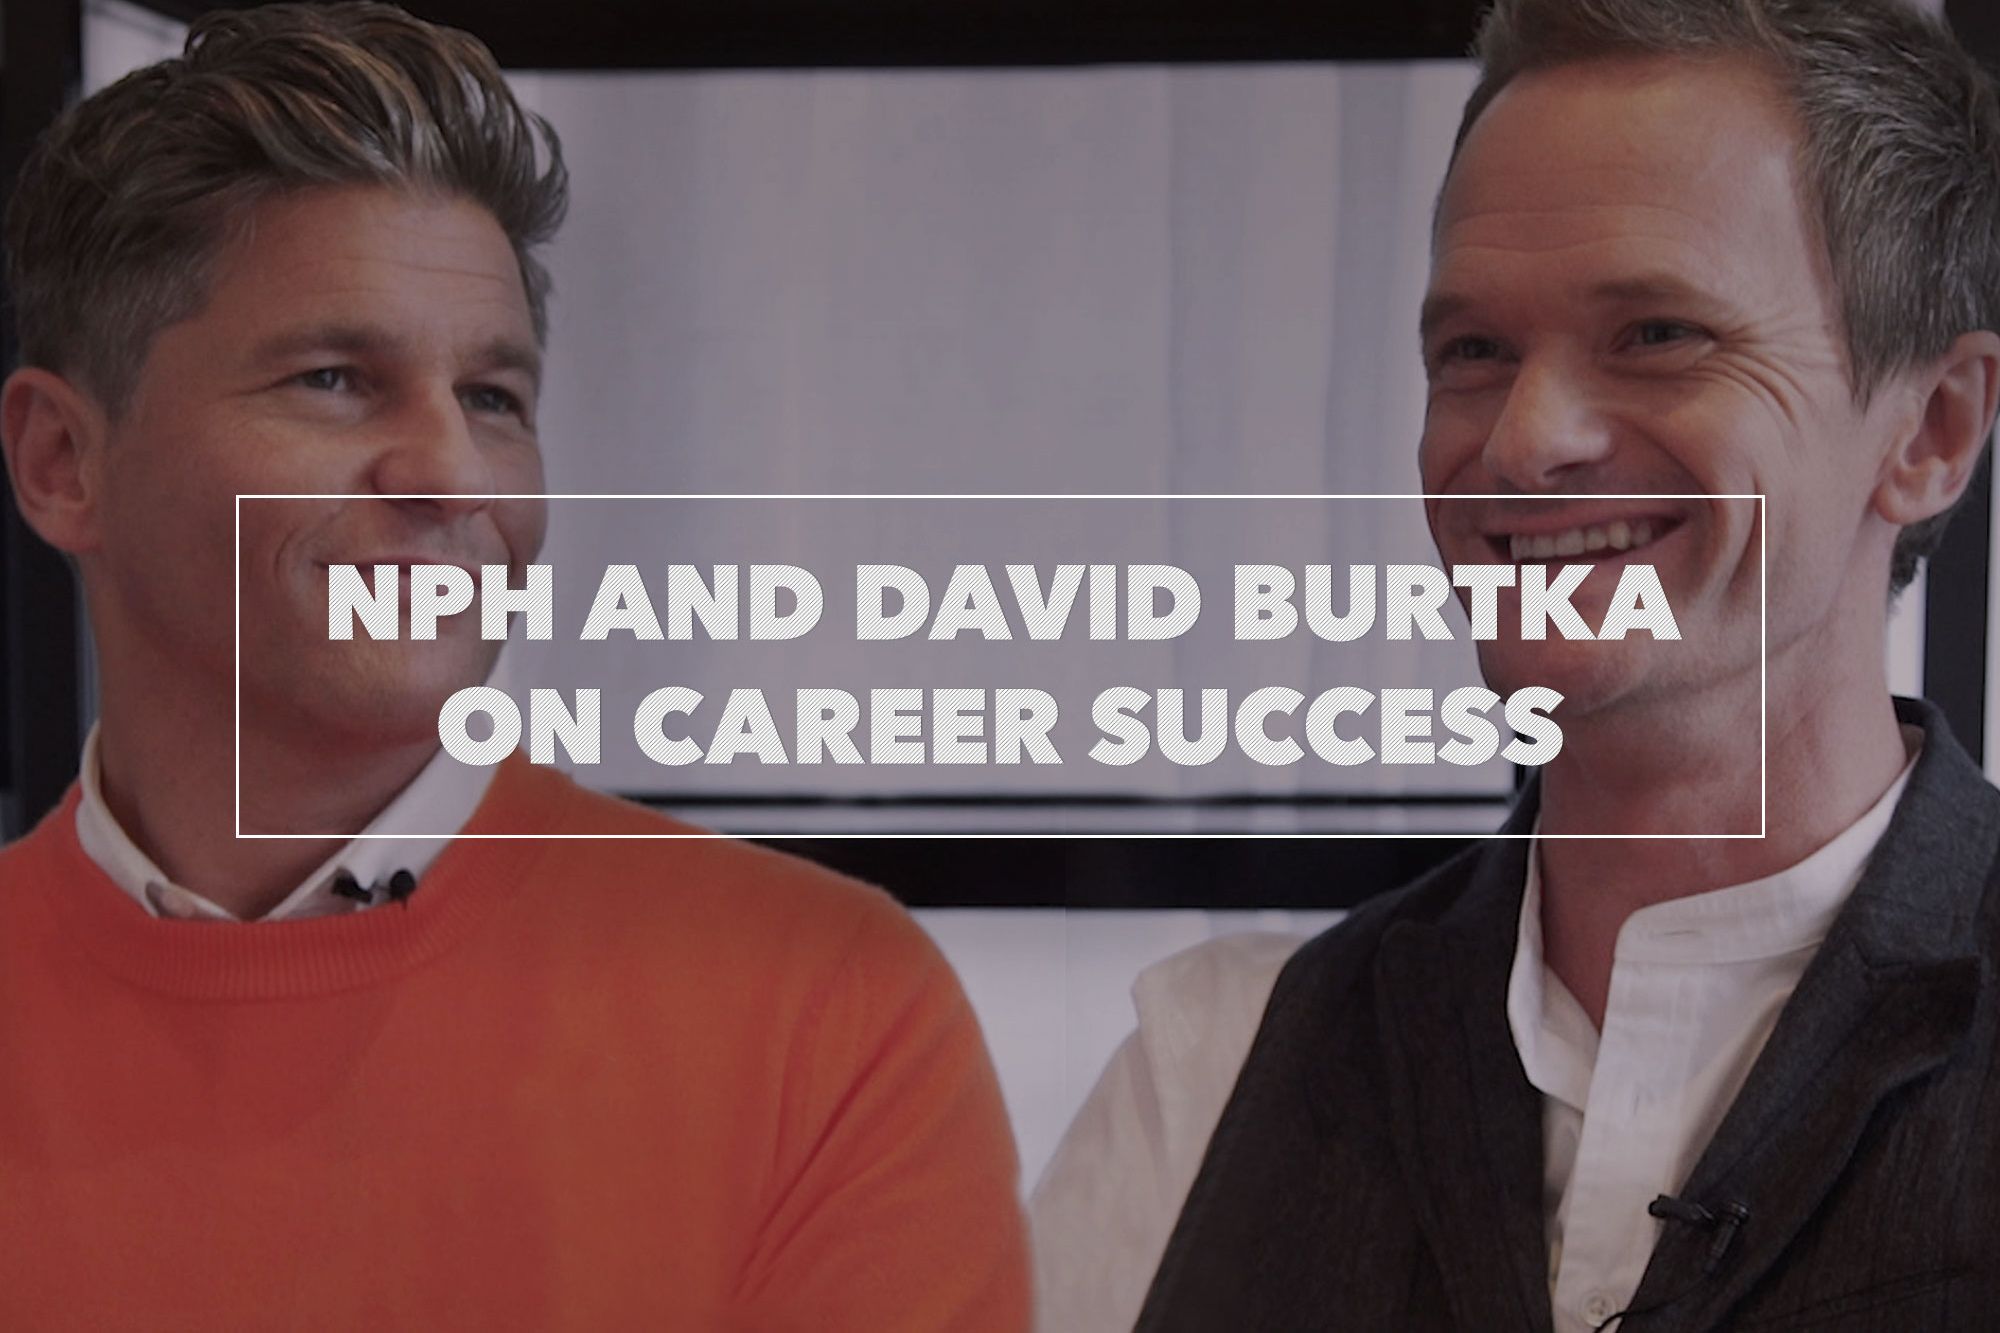 Neil Patrick Harris and David Burtka Reveal Top Tips for Career Success (Video)